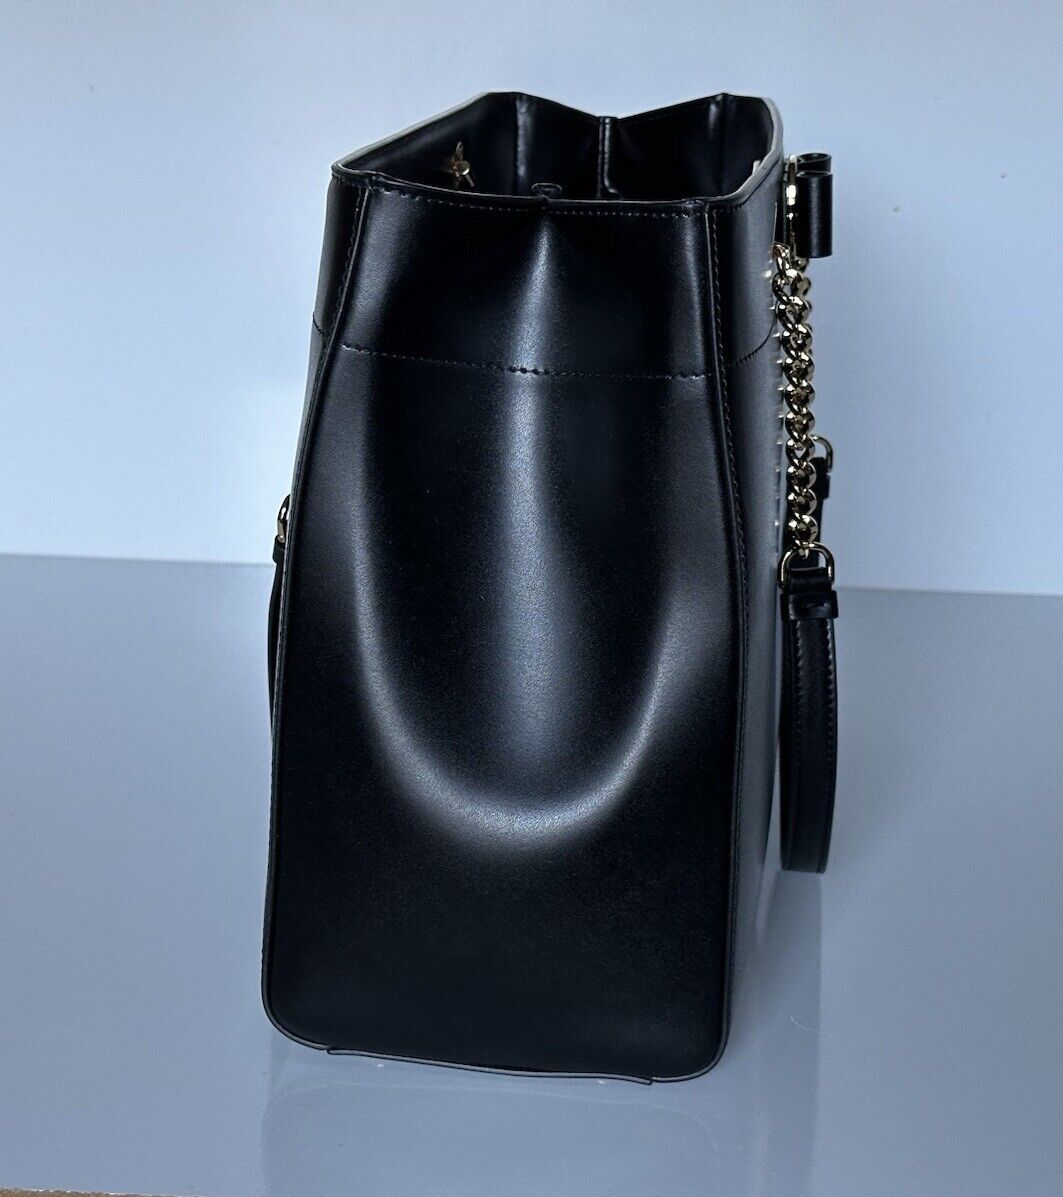 NWT $1590 Salvatore Ferragamo Leather Tote Shoulder Bag Black 0753248 Italy